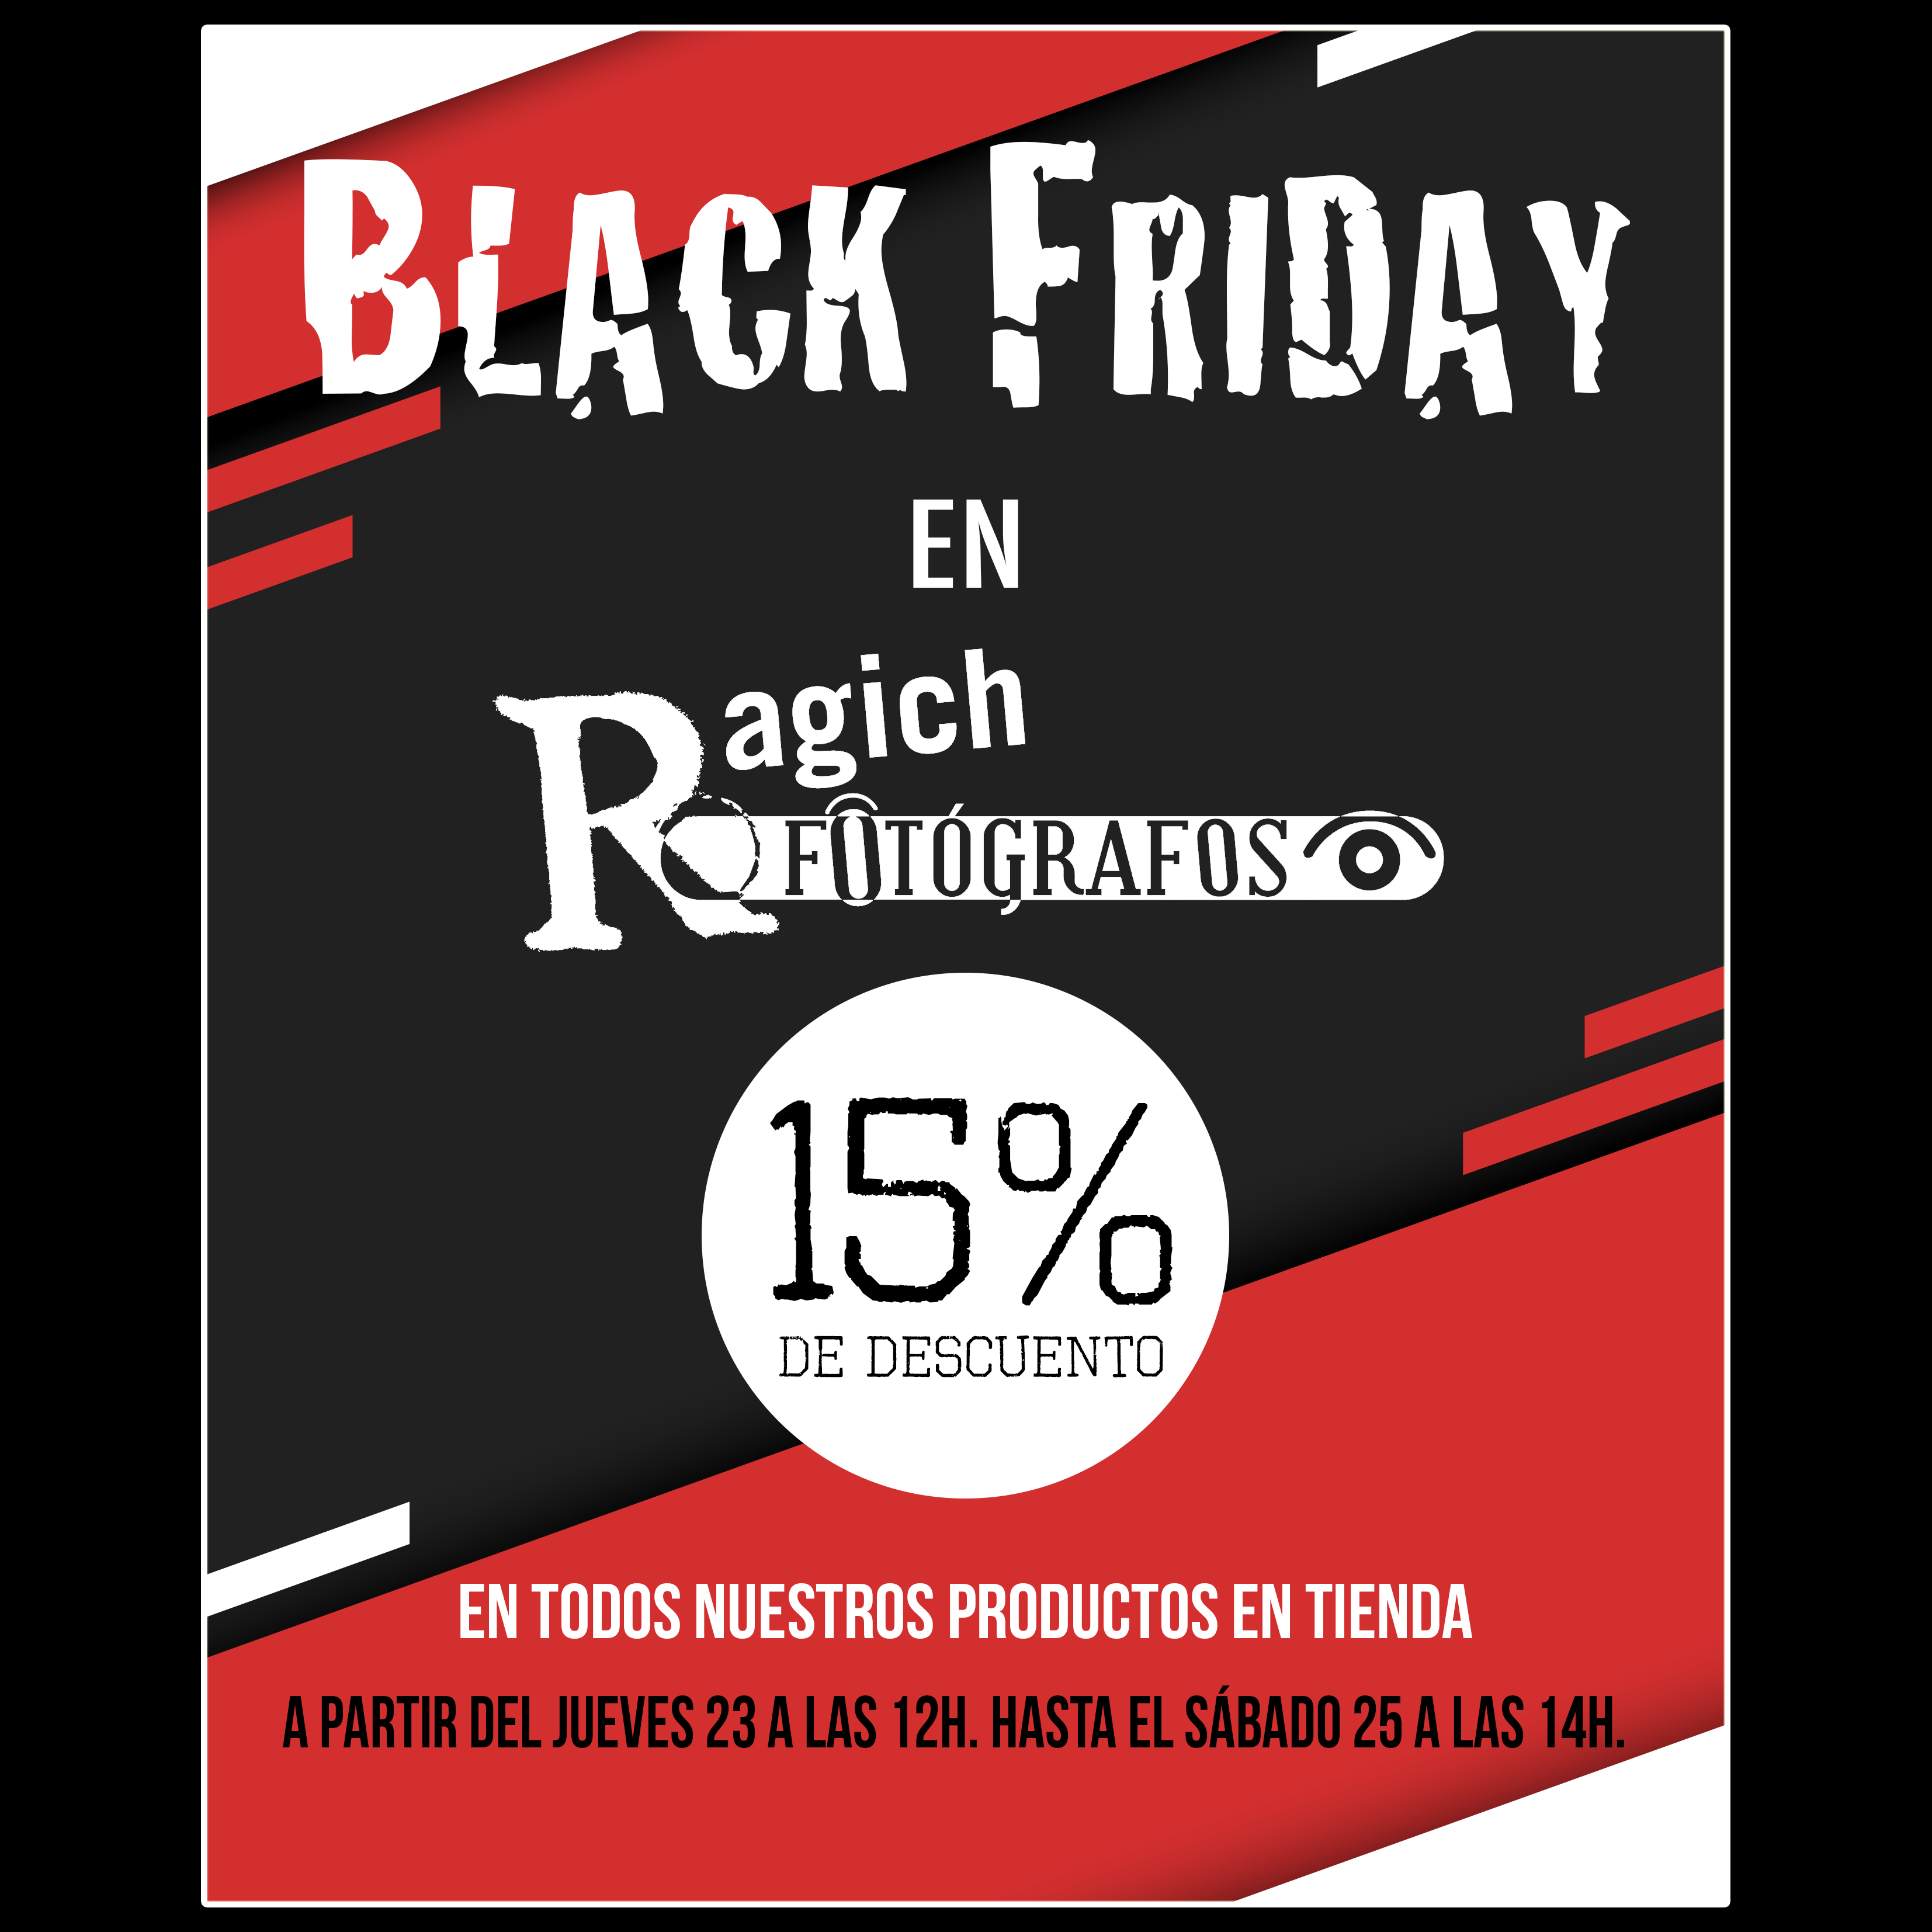 Black Friday en Ragich Fotógrafos de Cáceres